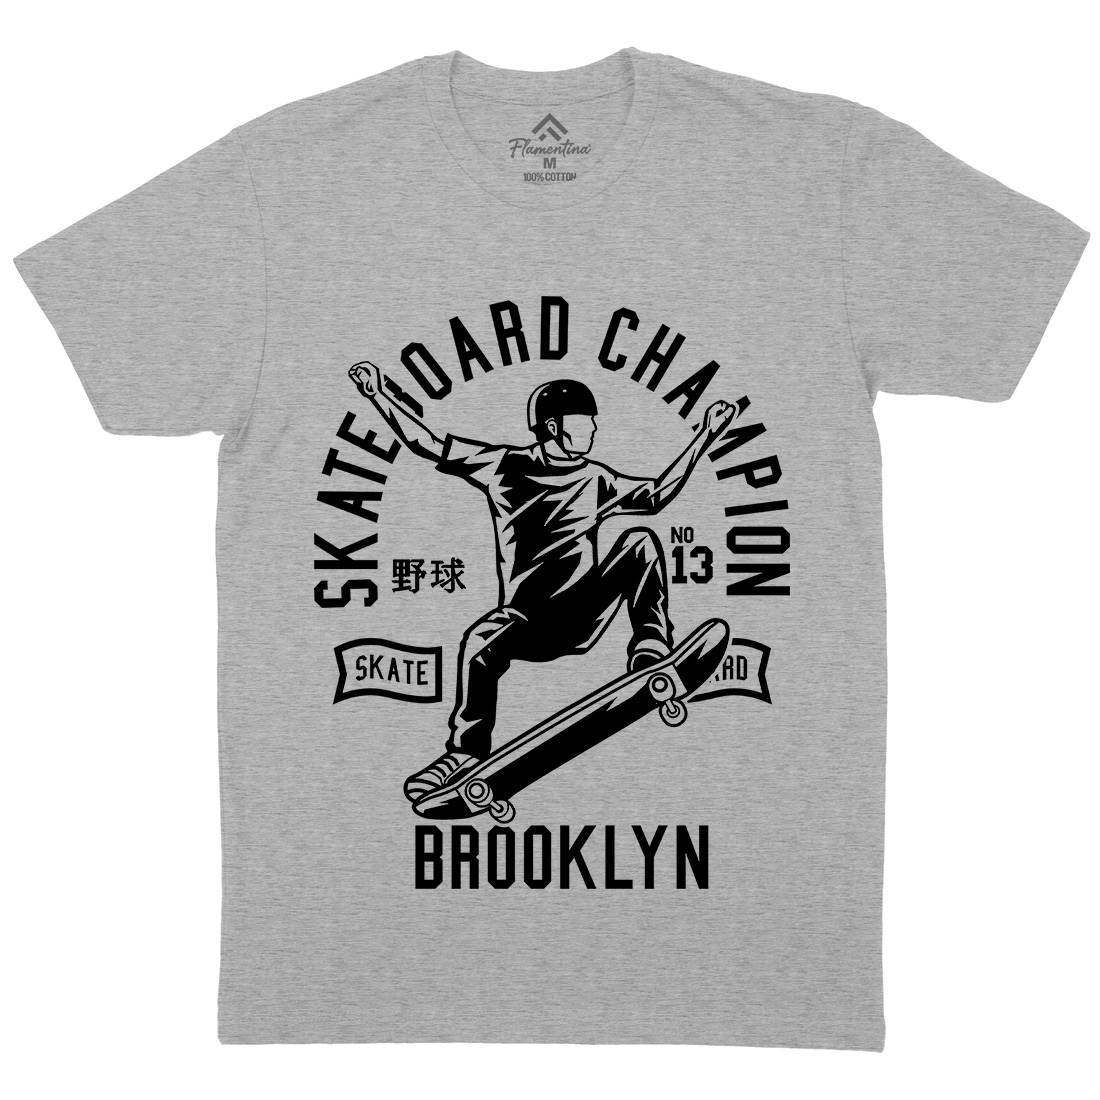 Skateboard Champion Mens Crew Neck T-Shirt Skate B622